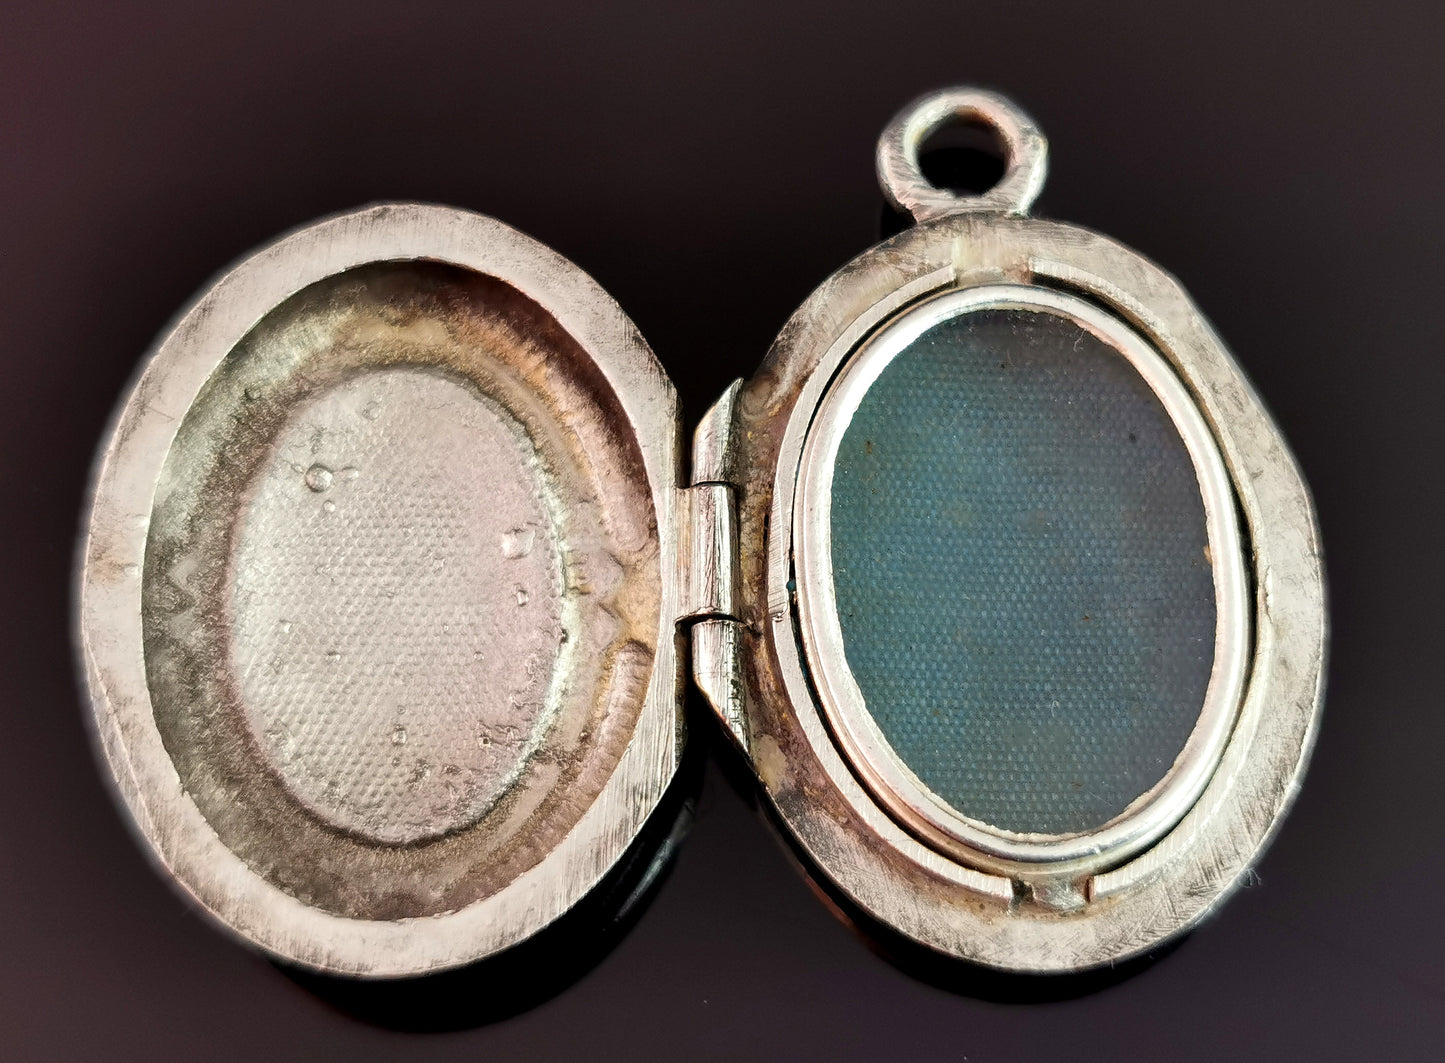 Antique Victorian silver locket, 1871, pendant